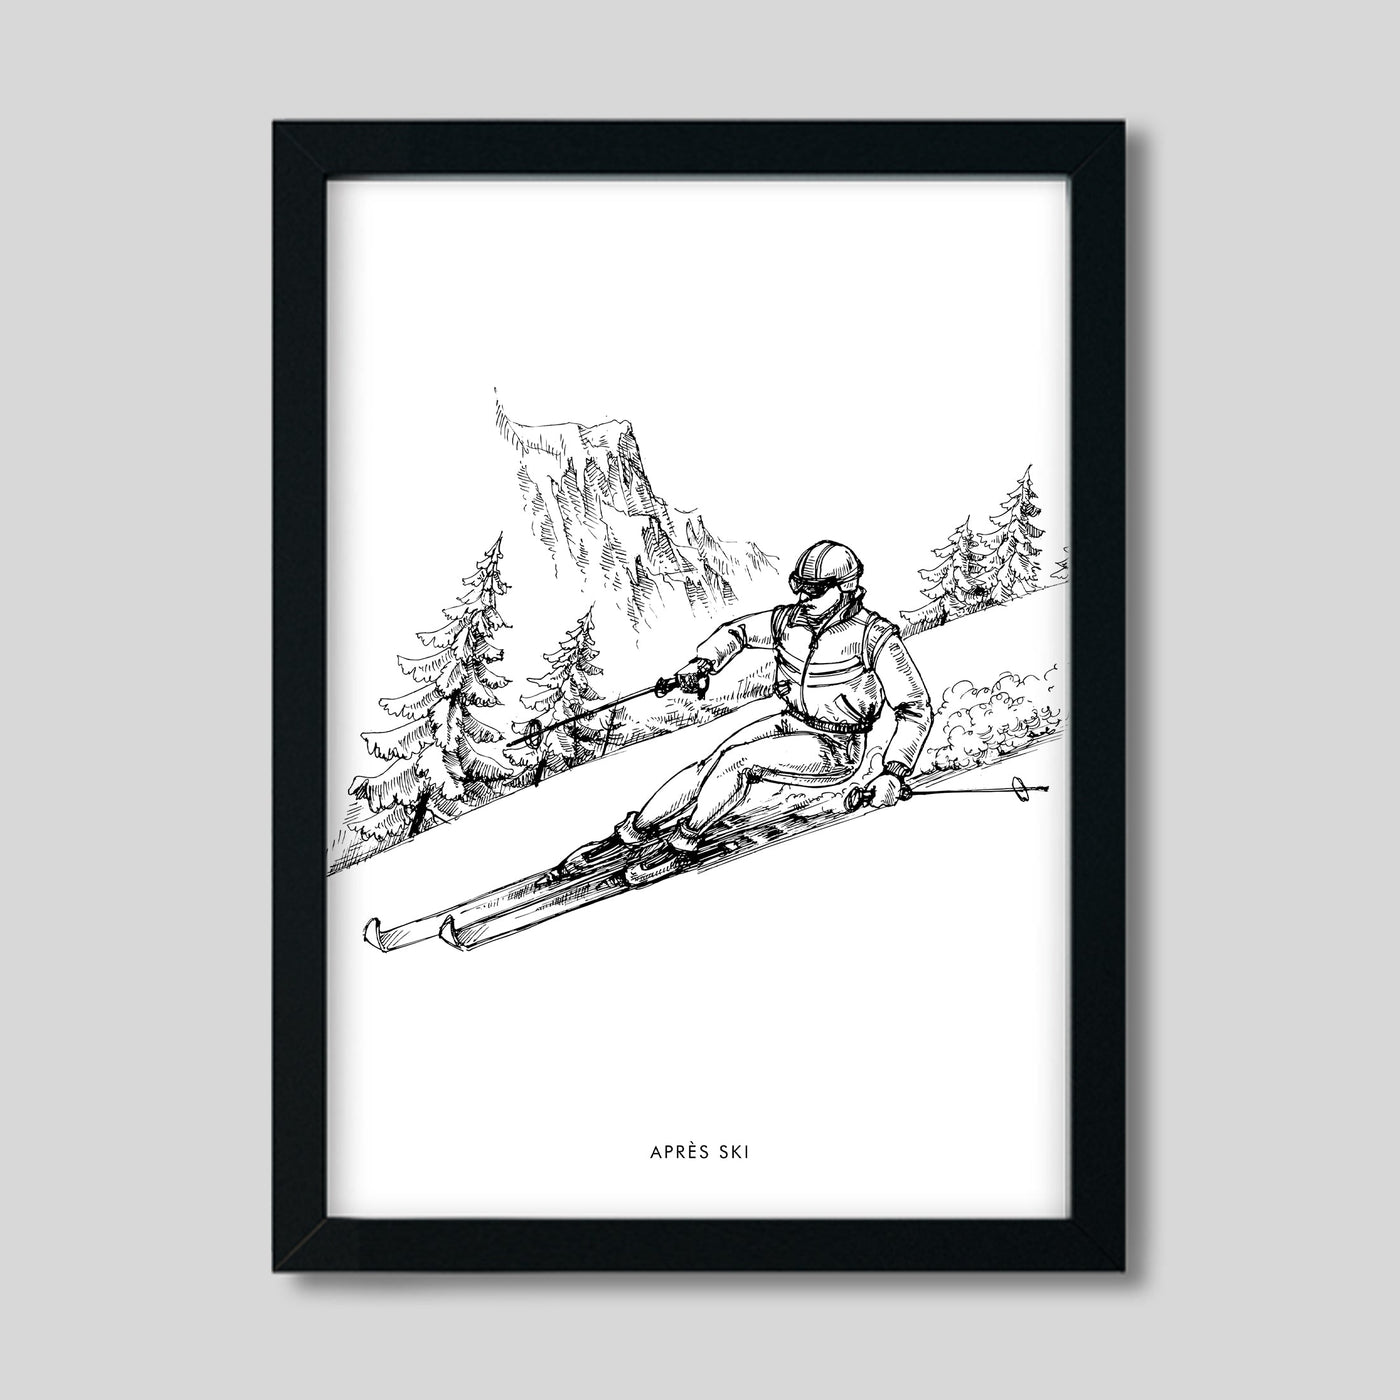 Gallery Print Black Print / 8x10 / Black Frame Après Ski Skier Print Katie Kime